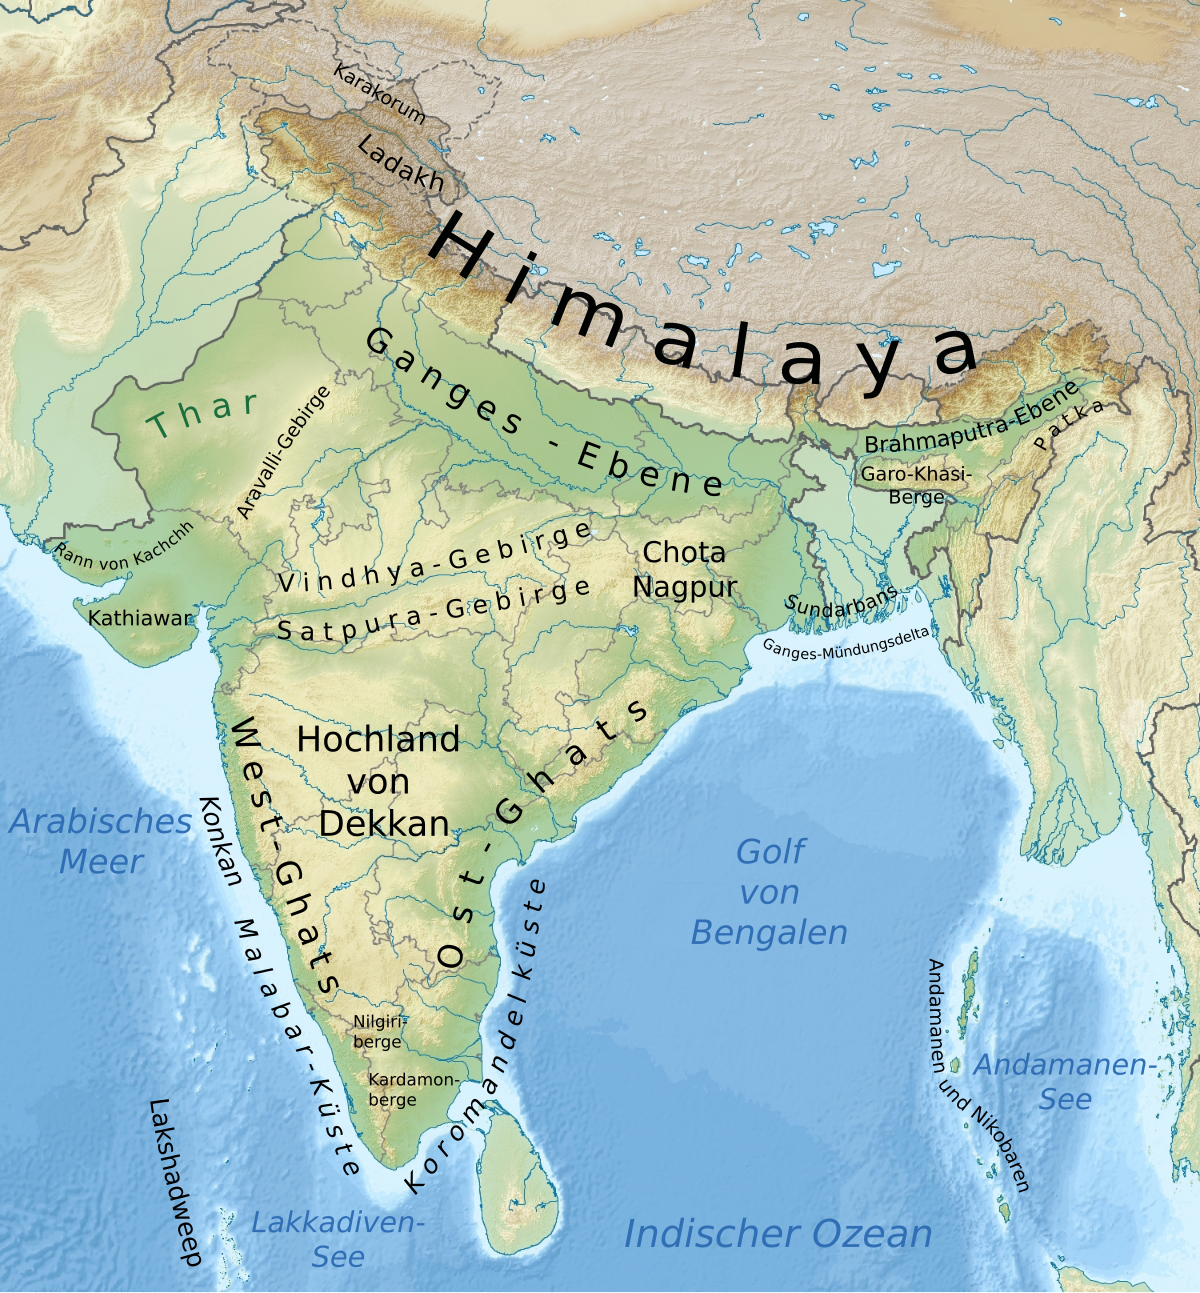 Где находится декан на физической карте. Гималаи на карте Индии. Река инд в Индии на карте. Река ганг в Индии на карте. Реки Индии на карте.